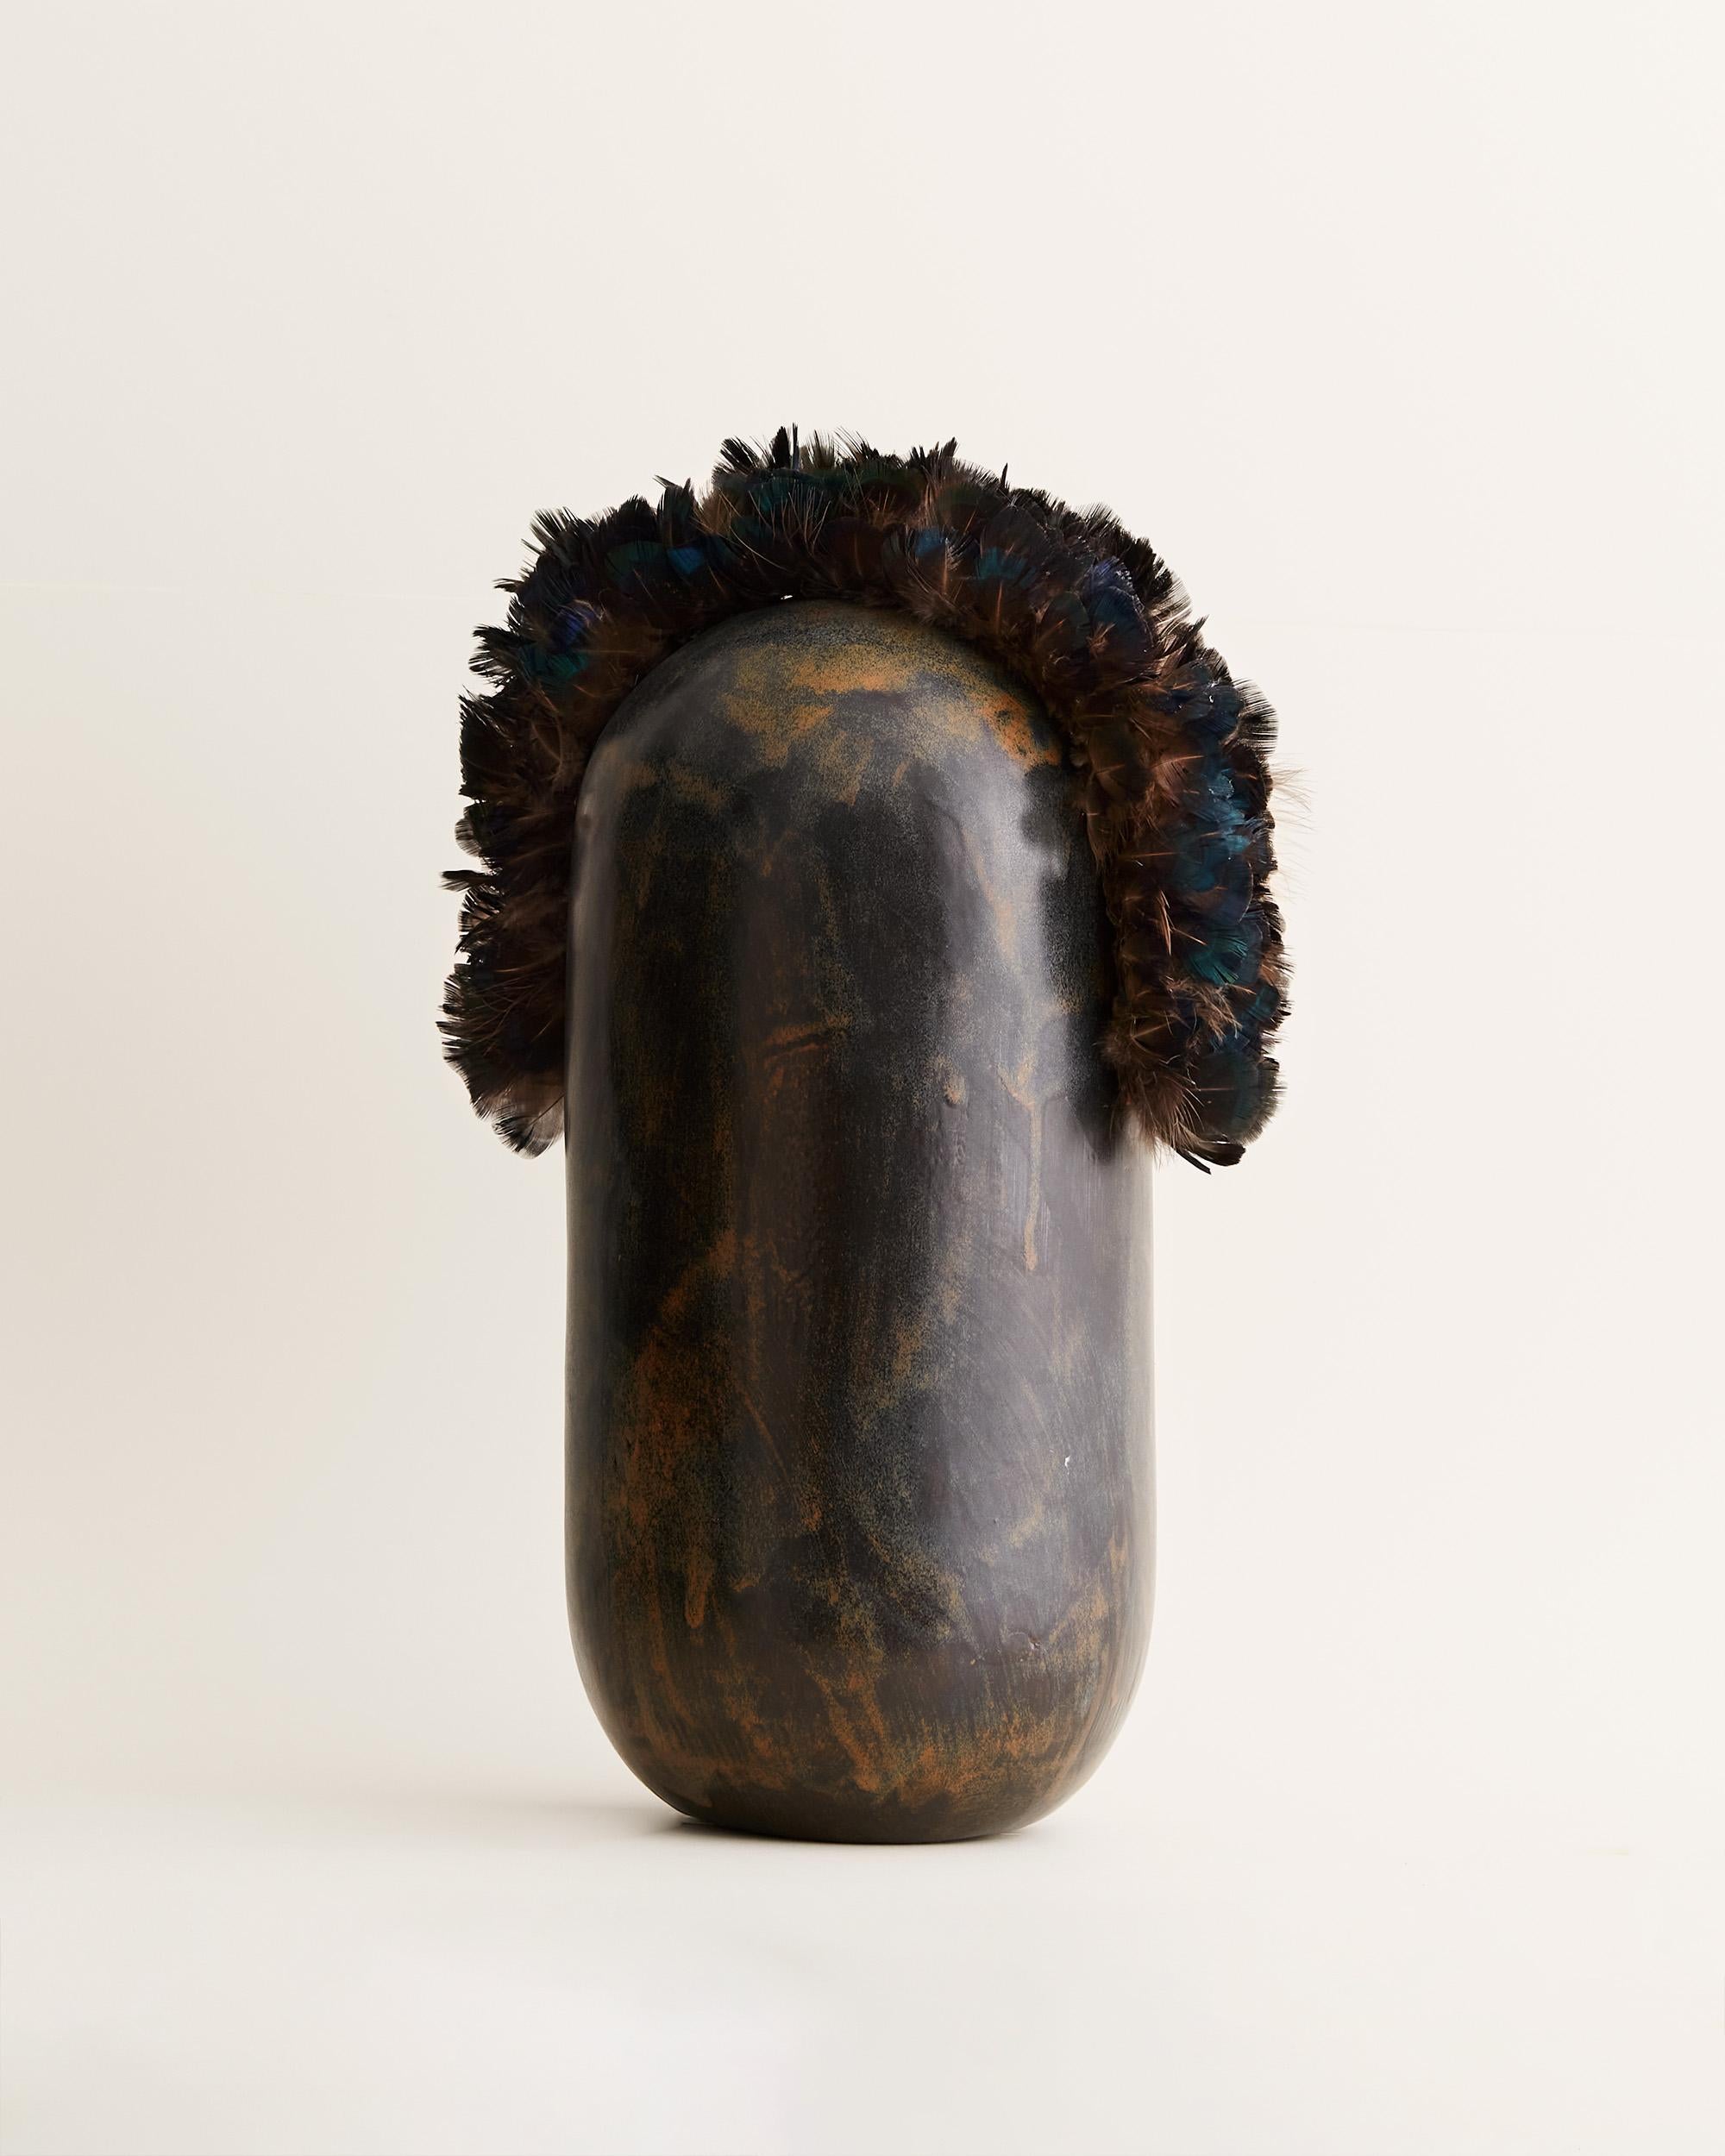 Angélique de Chabot Abstract Sculpture – Baboun – Zeitgenössische abstrakte Keramik-Skulptur mit Federn